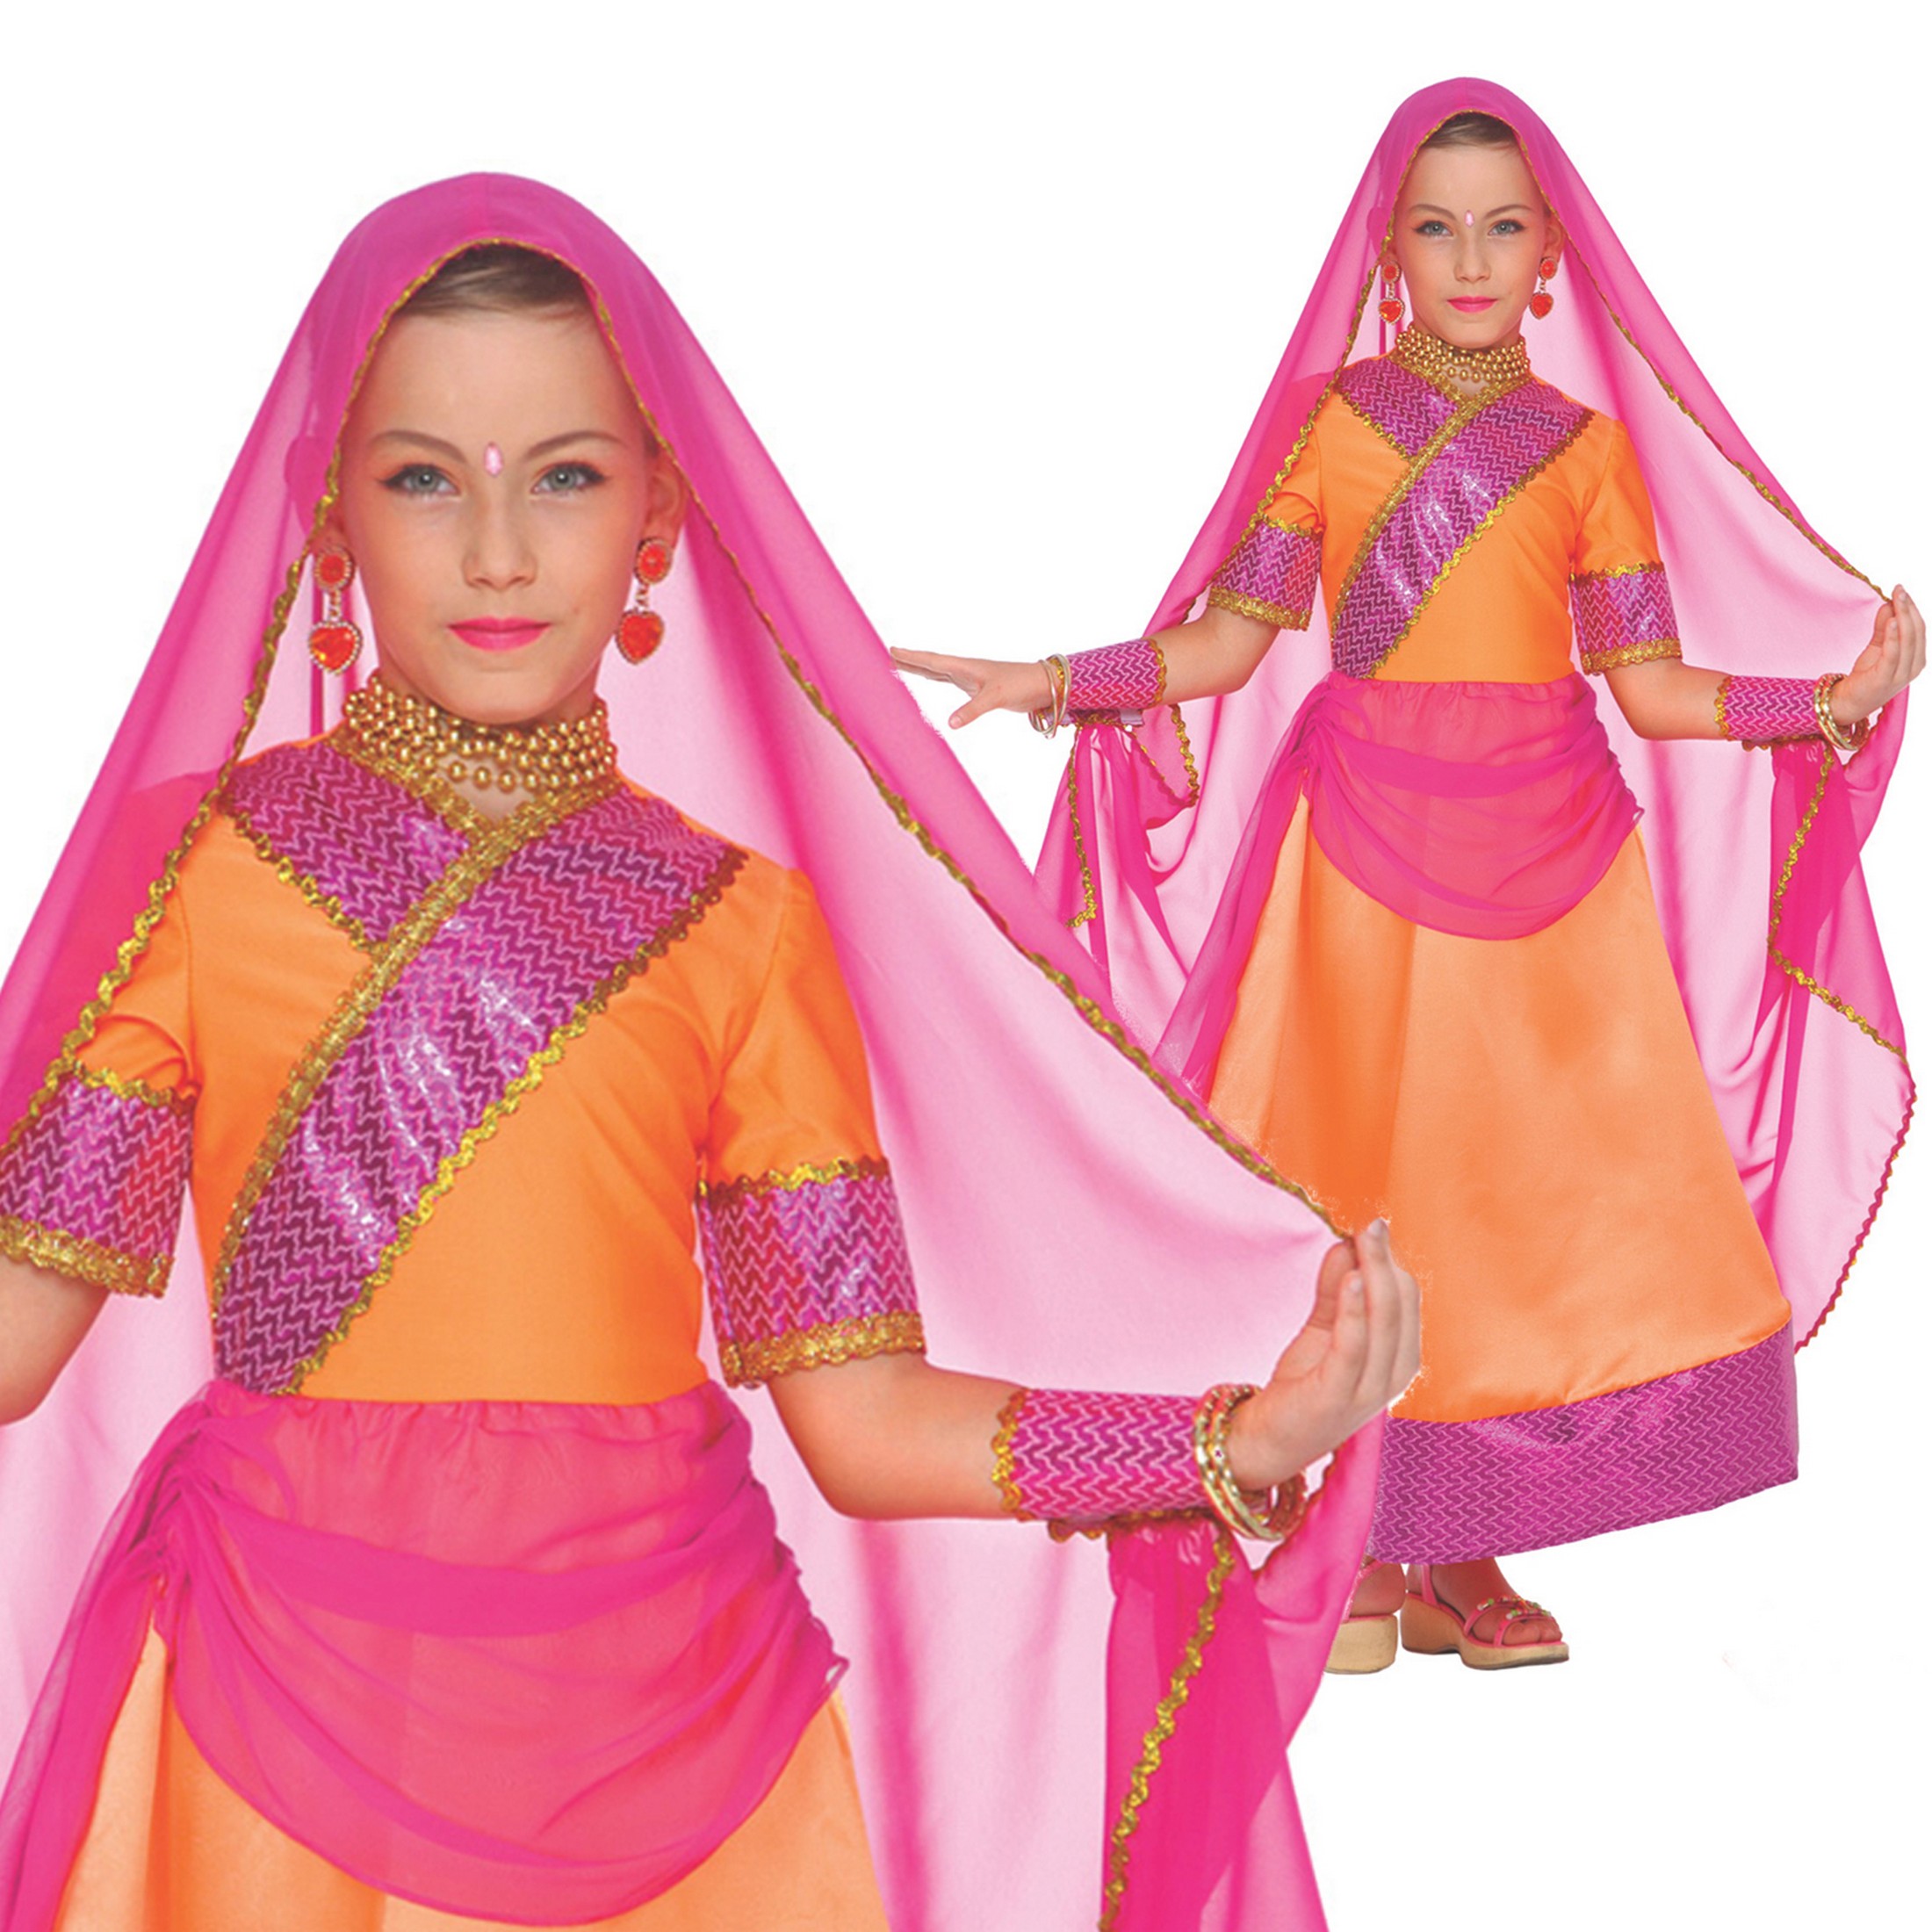 Morph Girls Bollywood Sari Costume with Veil Kids Indian Belly Dancer Fancy Dress Halloween Orange S - image 1 of 3